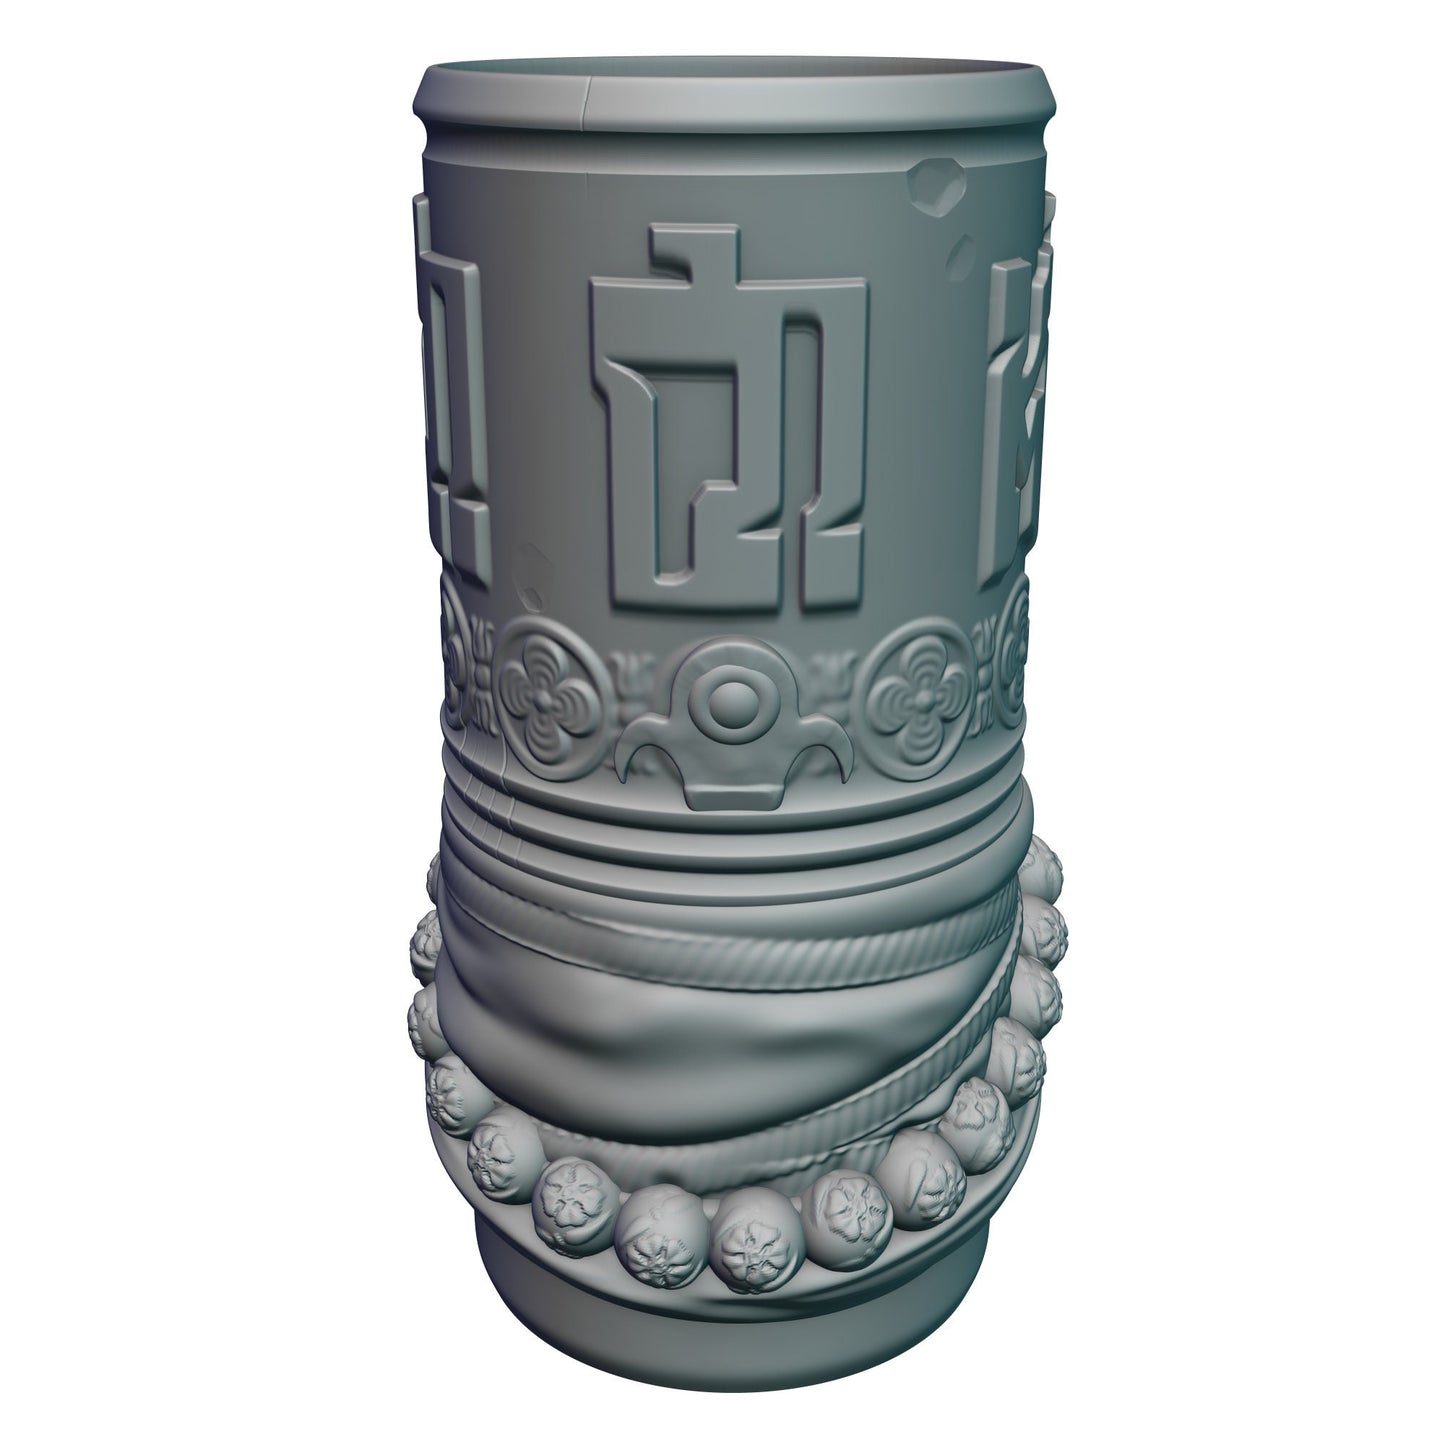 Monk Mythic Mug Dice Vault & Can Holder- Mythic Mugs- Ars Moriendi 3D